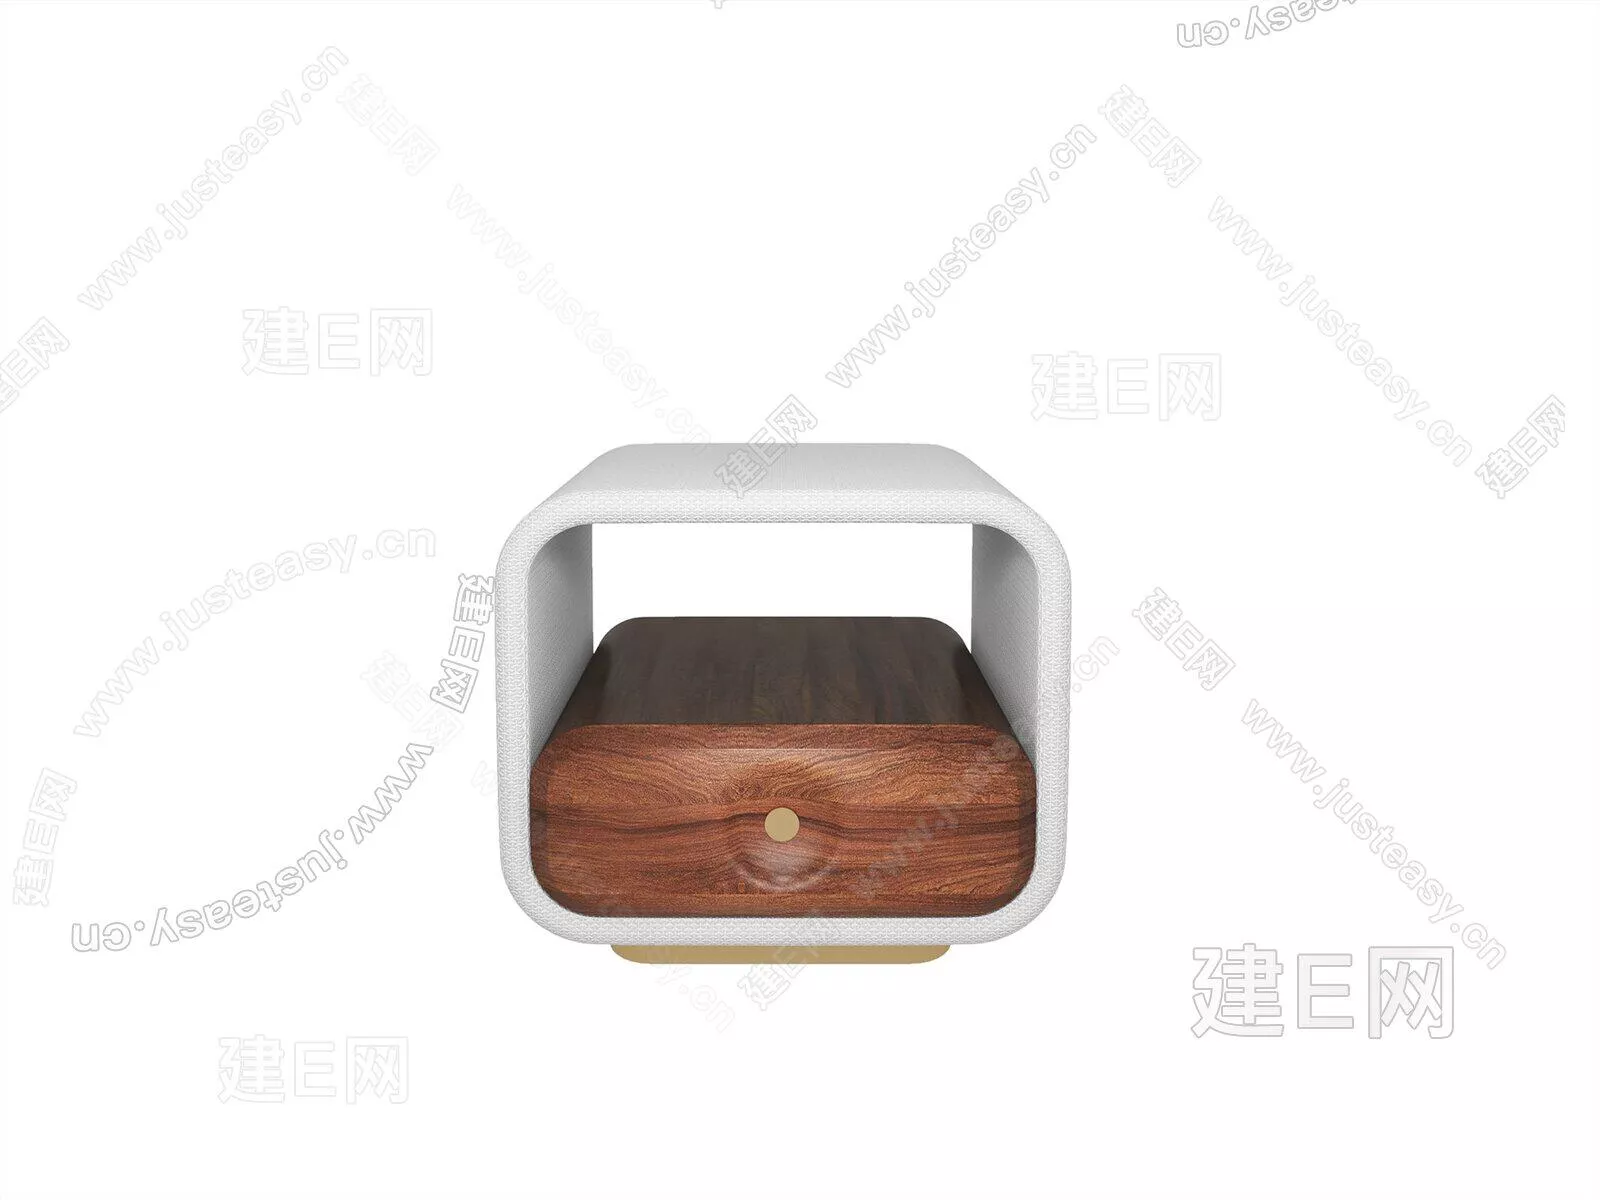 CHINESE BEDSIDE TABLE - SKETCHUP 3D MODEL - ENSCAPE - 105269447